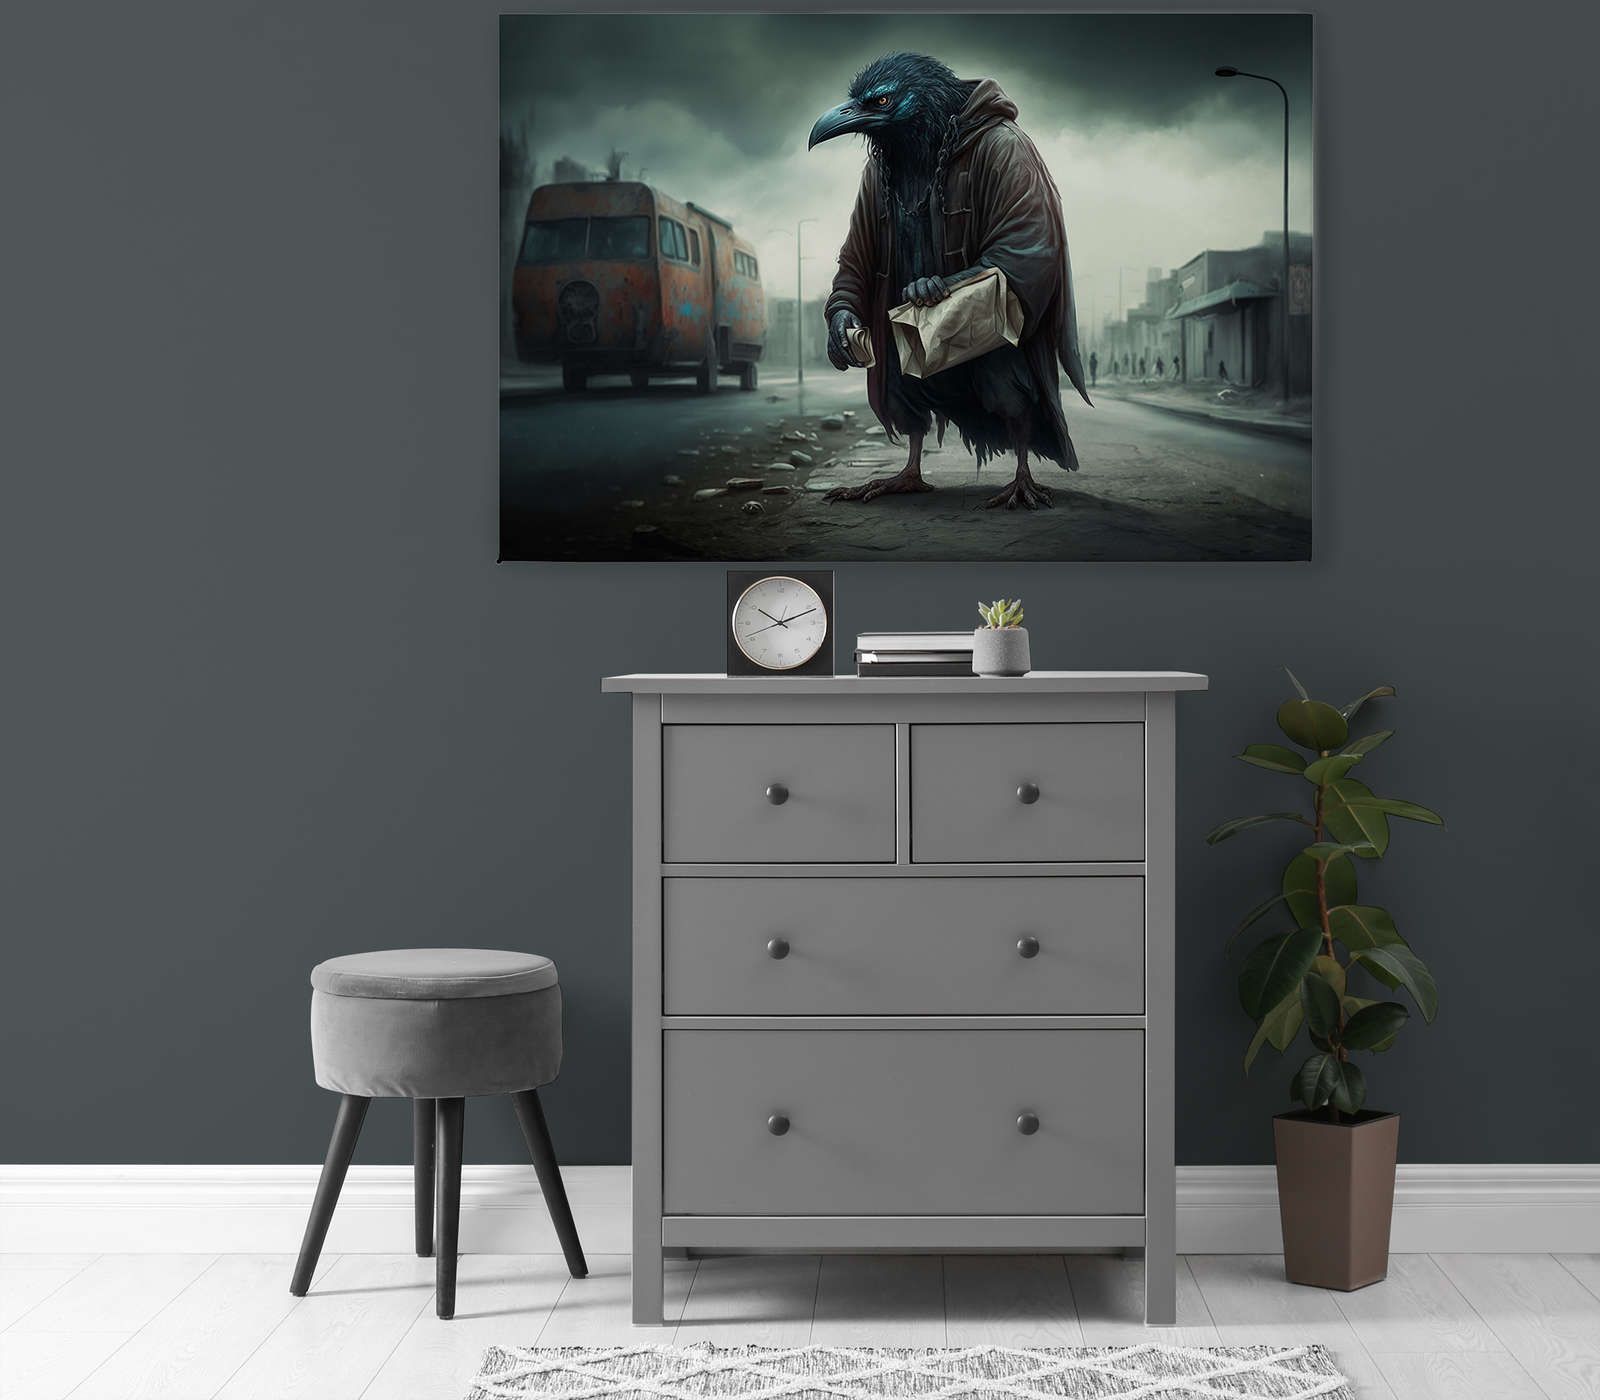             KI-Leinwandbild »Street Crow« – 120 cm x 80 cm
        